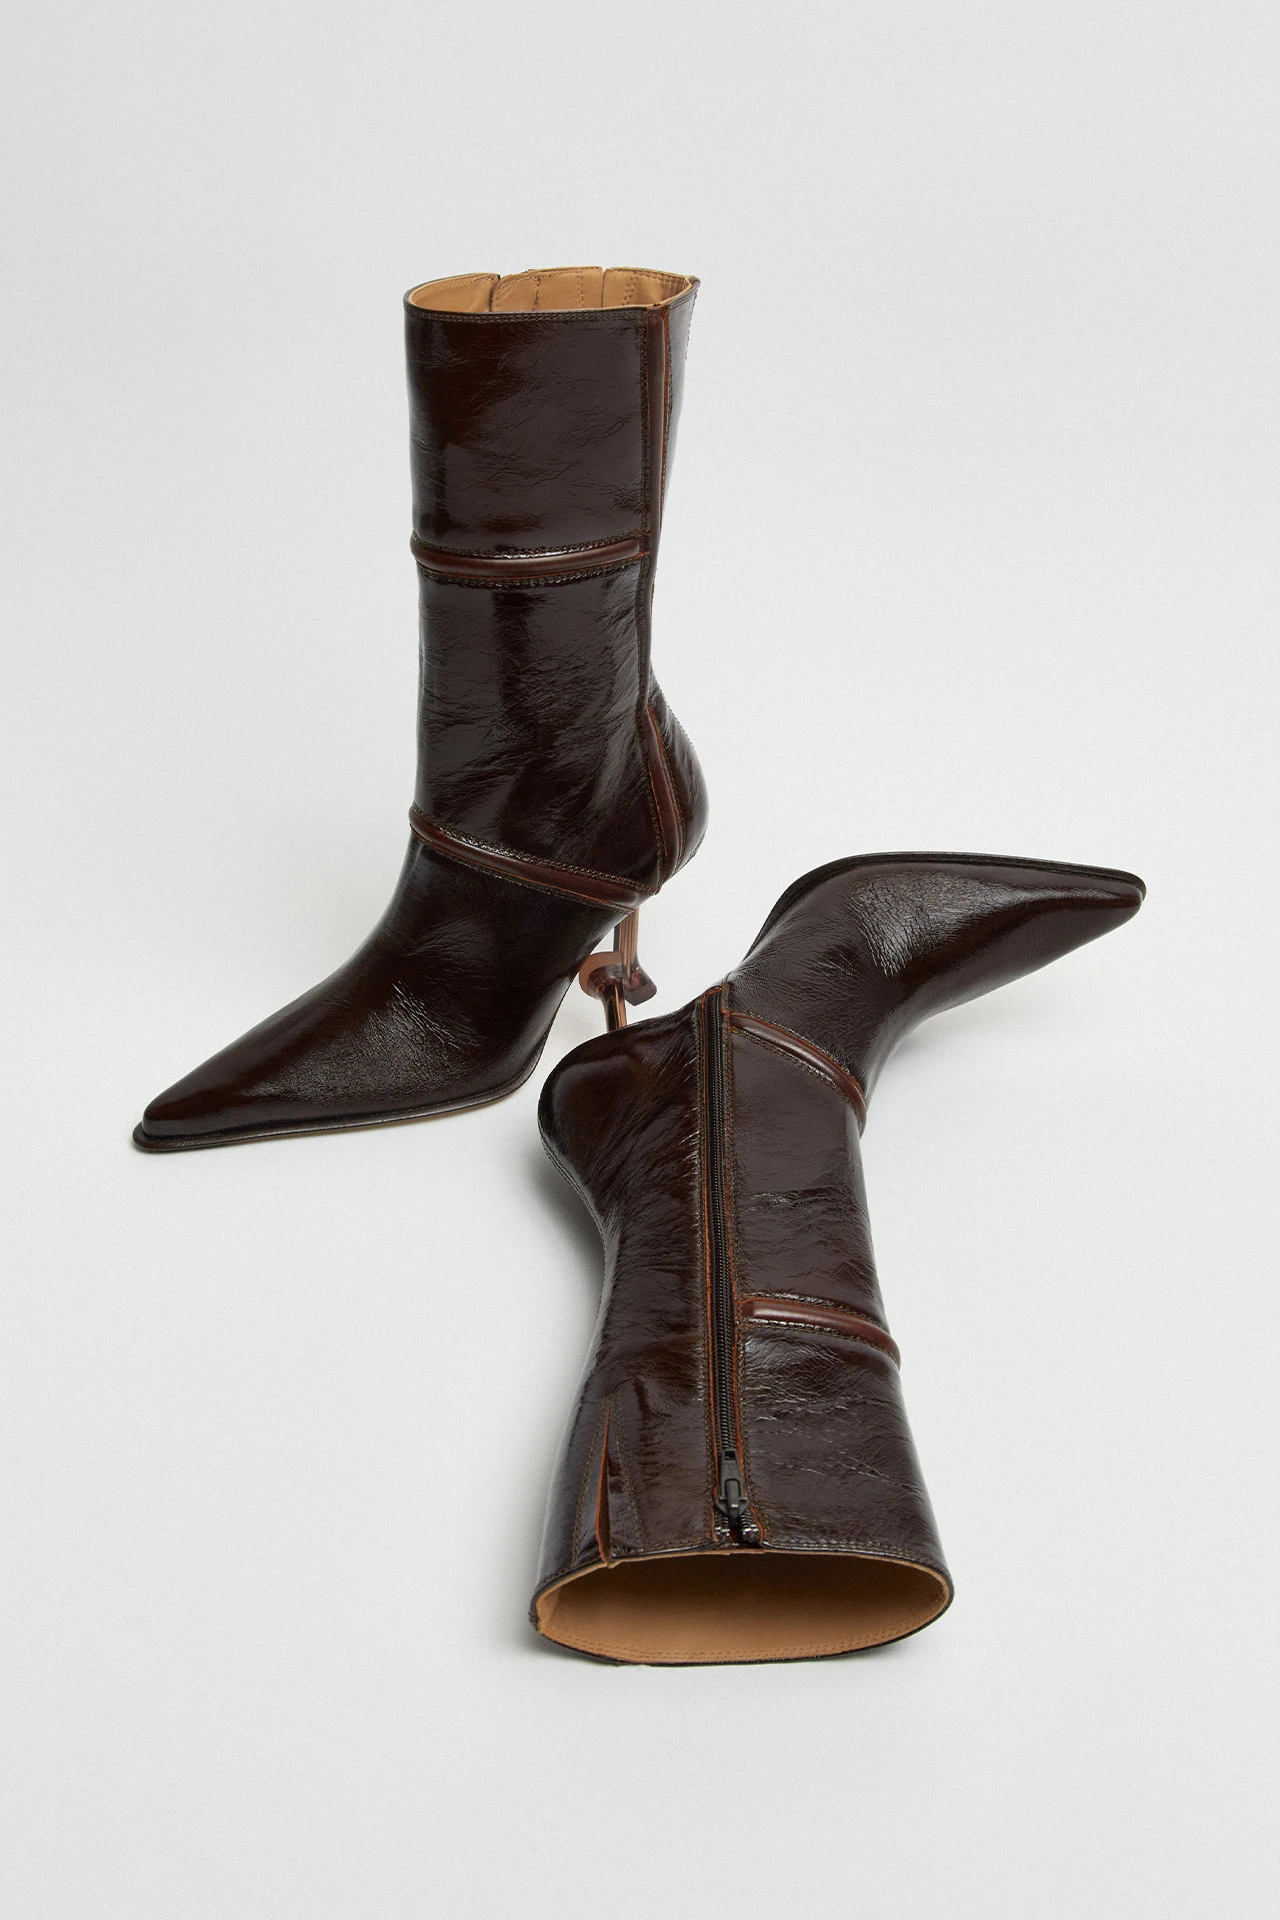 Miista-sander-brown-boots-02